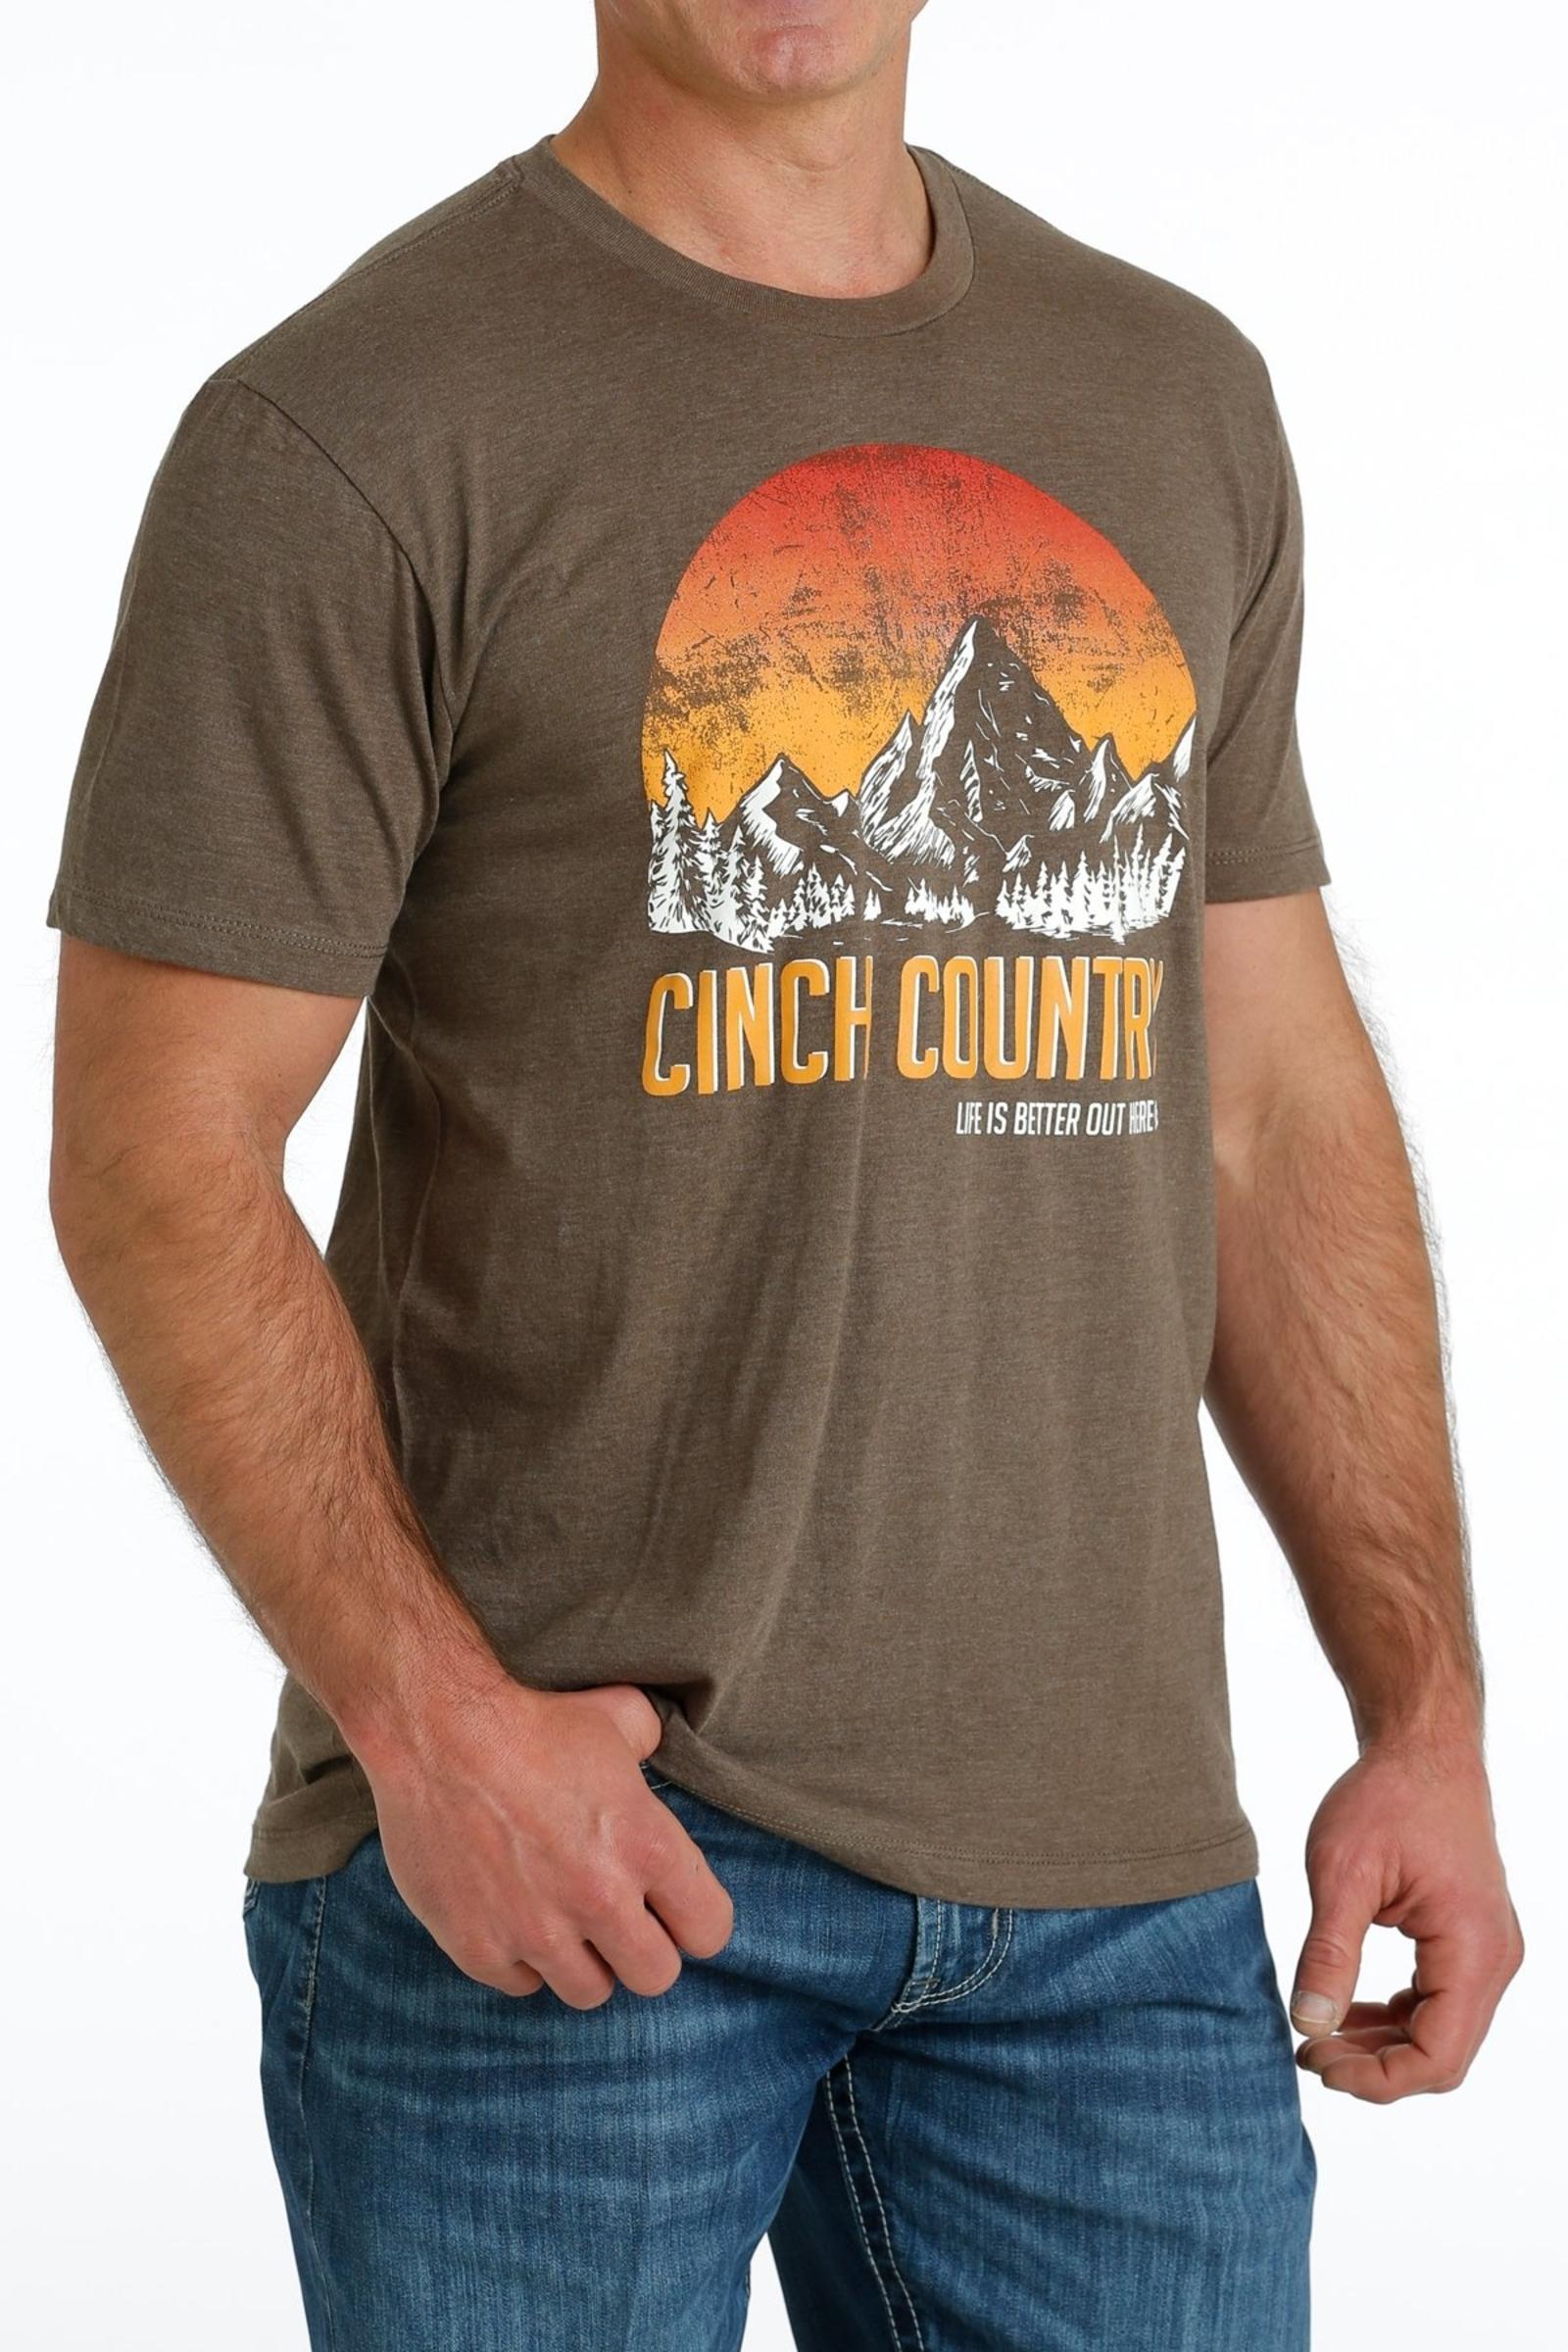 Cinch Jeans Men's Cinch Country Tee - Brown